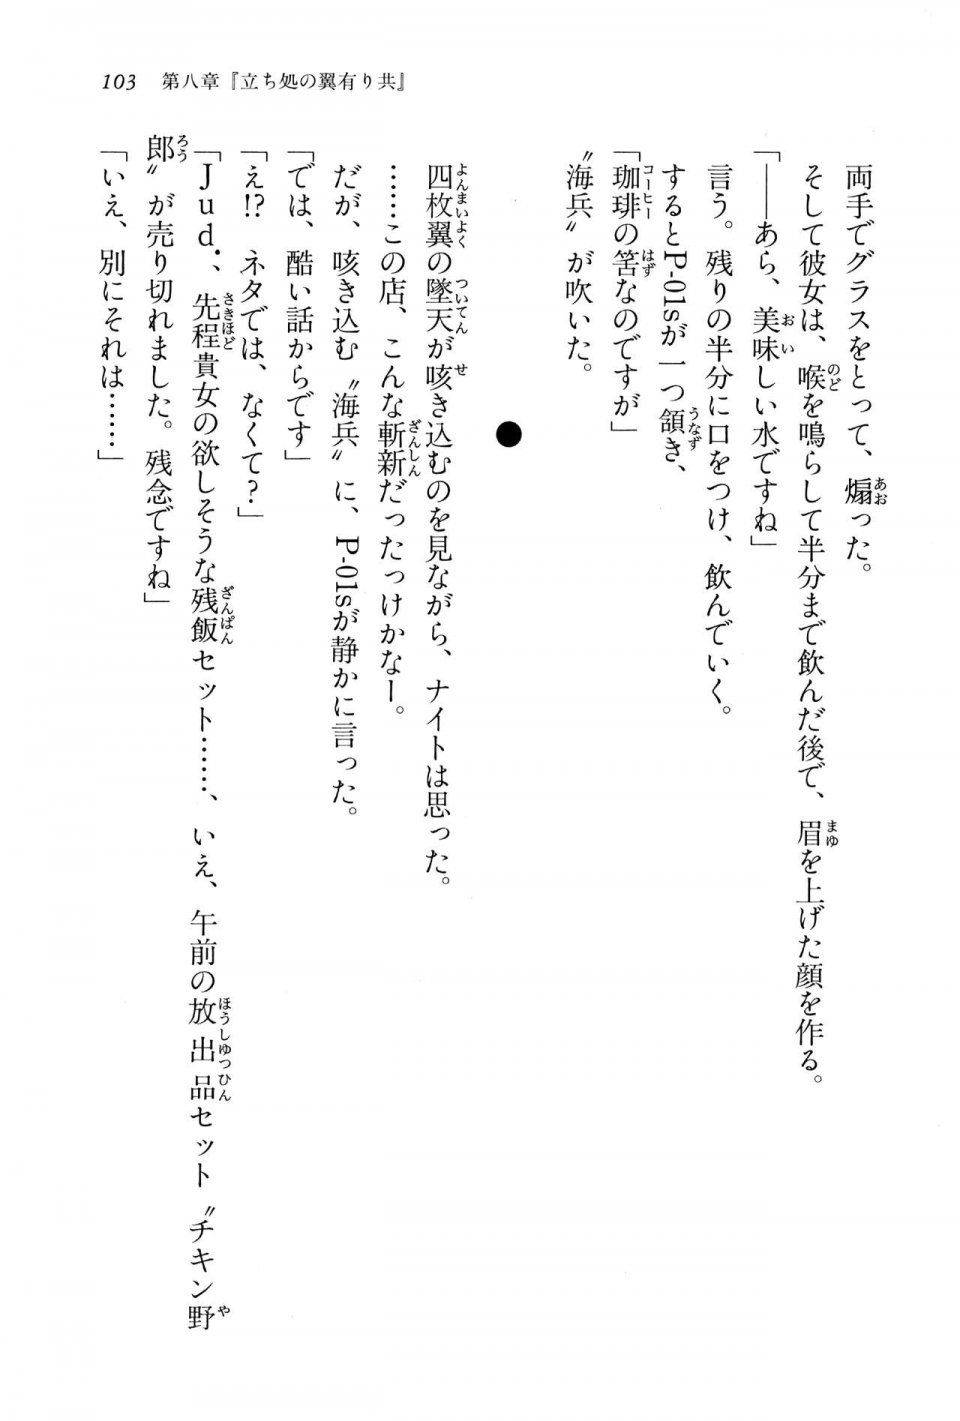 Kyoukai Senjou no Horizon BD Special Mininovel Vol 6(3B) - Photo #107